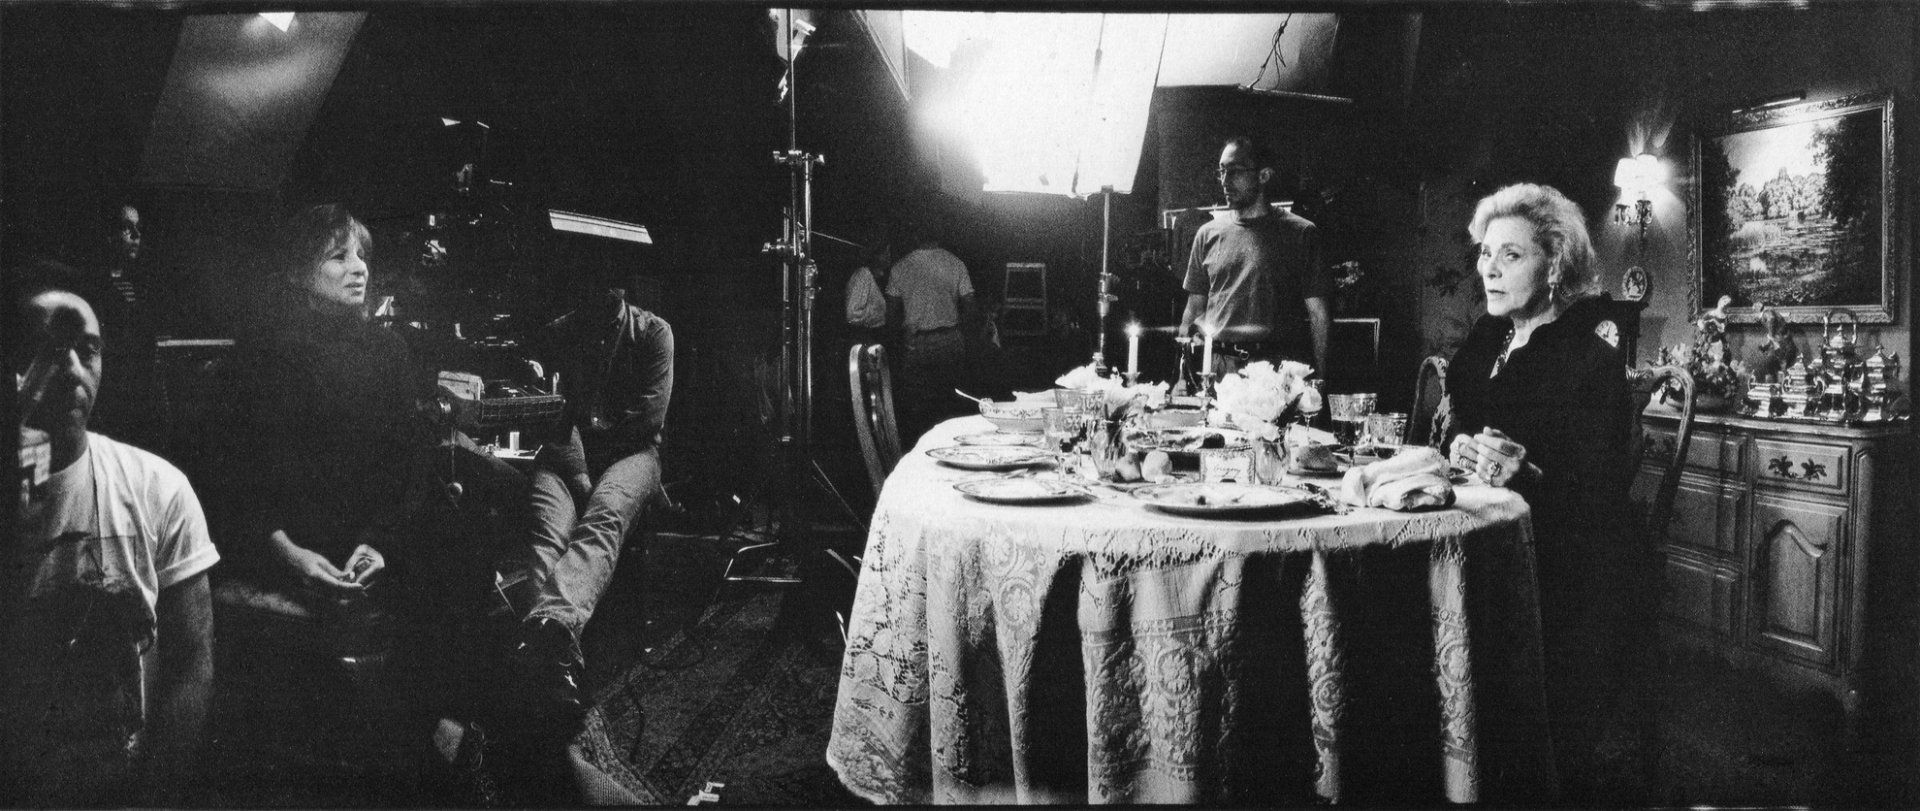 Streisand directing Bacall on set.  Photo by: Jeff Bridges